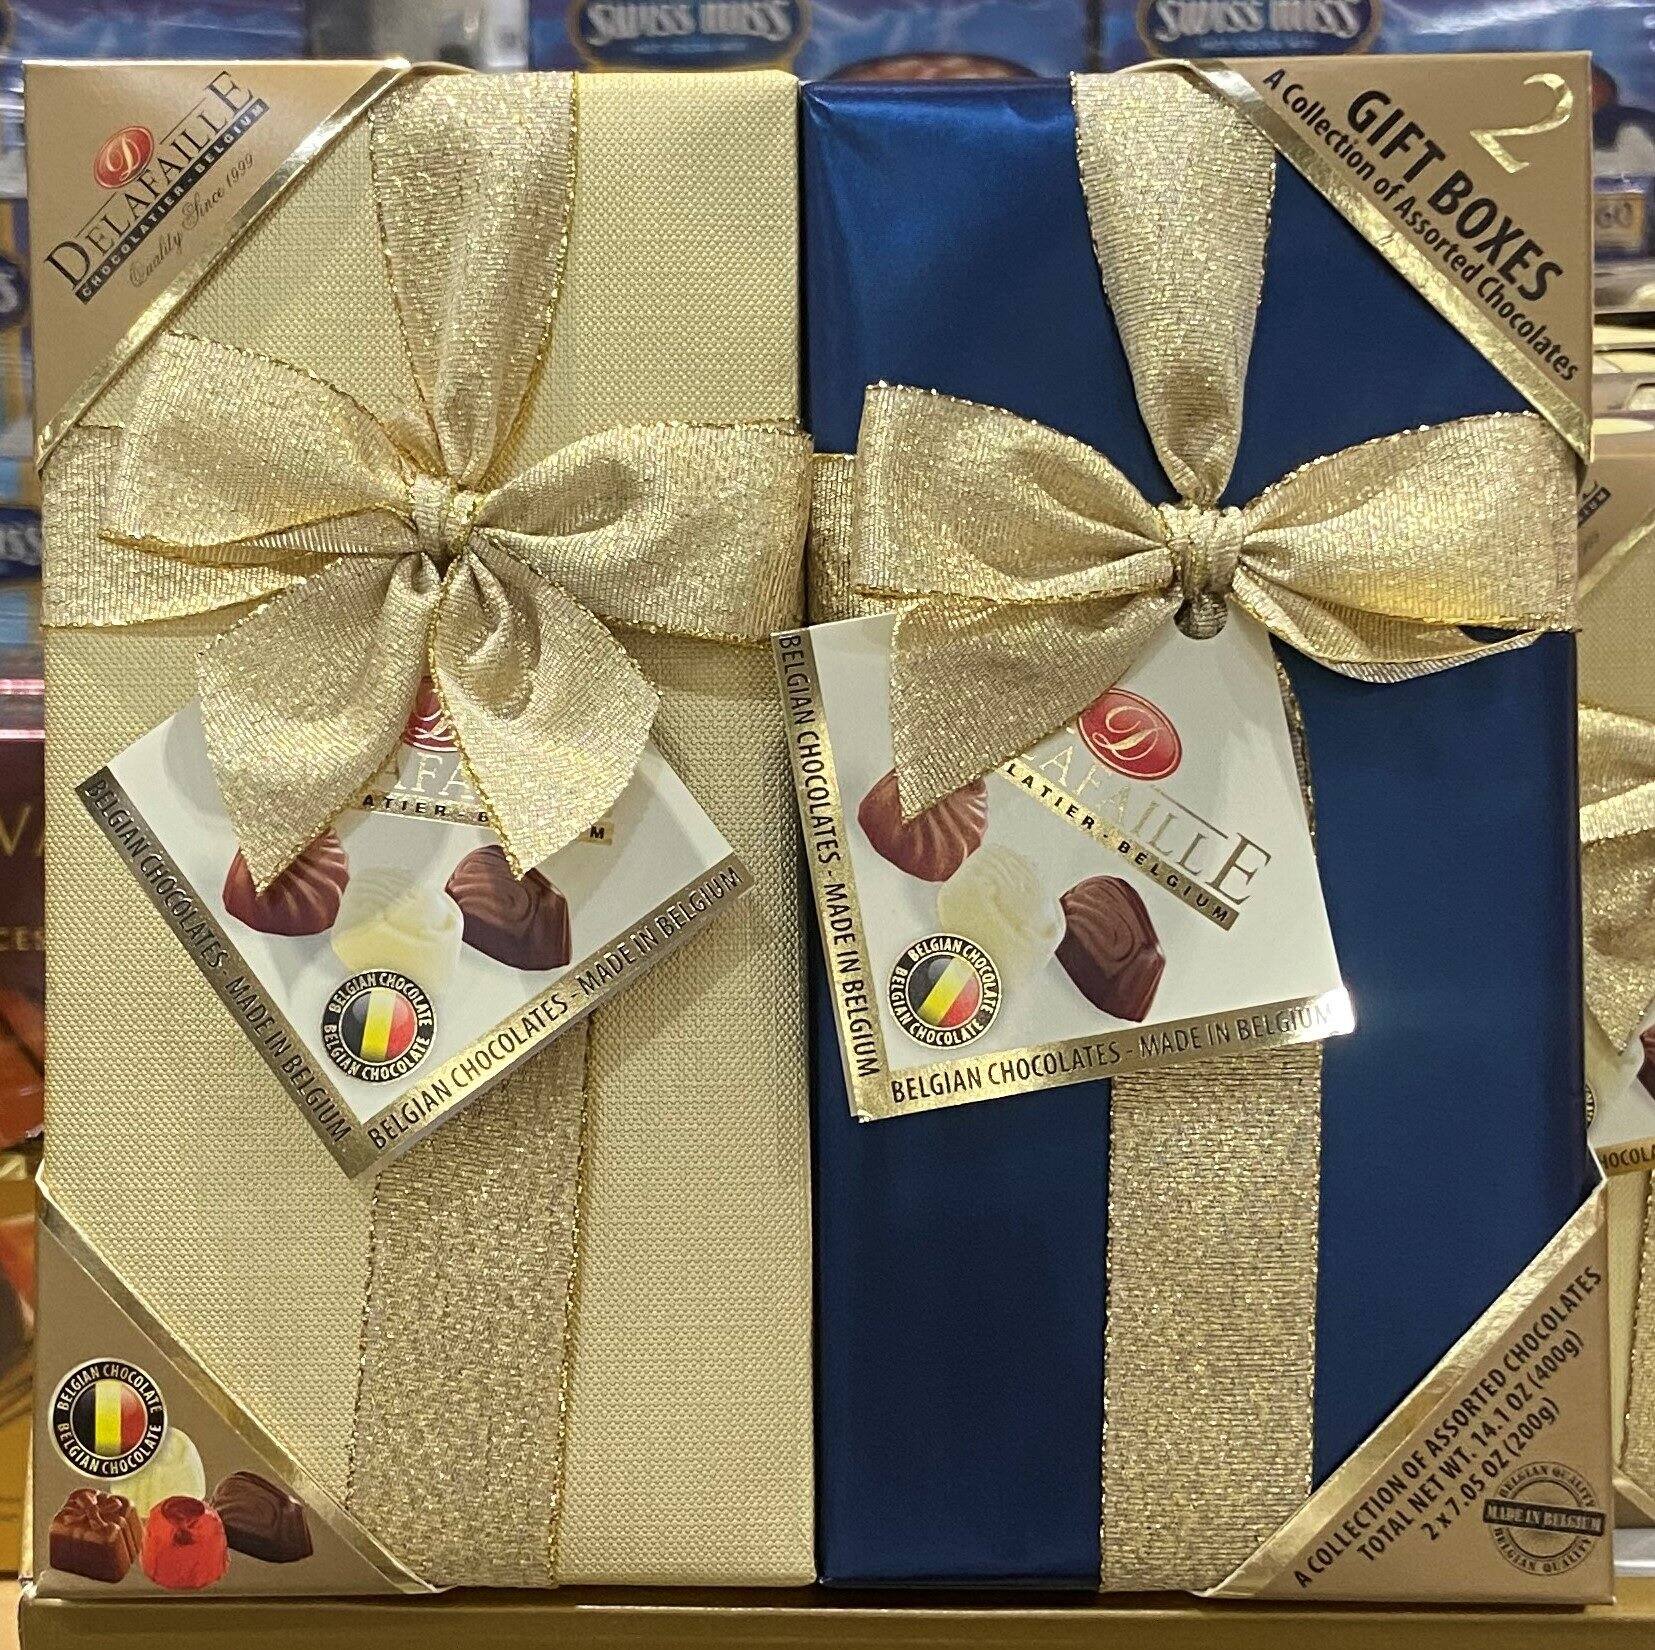 Bộ 2 hộp socola Delafaille Belgian Chocolate Gift Boxes của Bỉ mỗi hộp